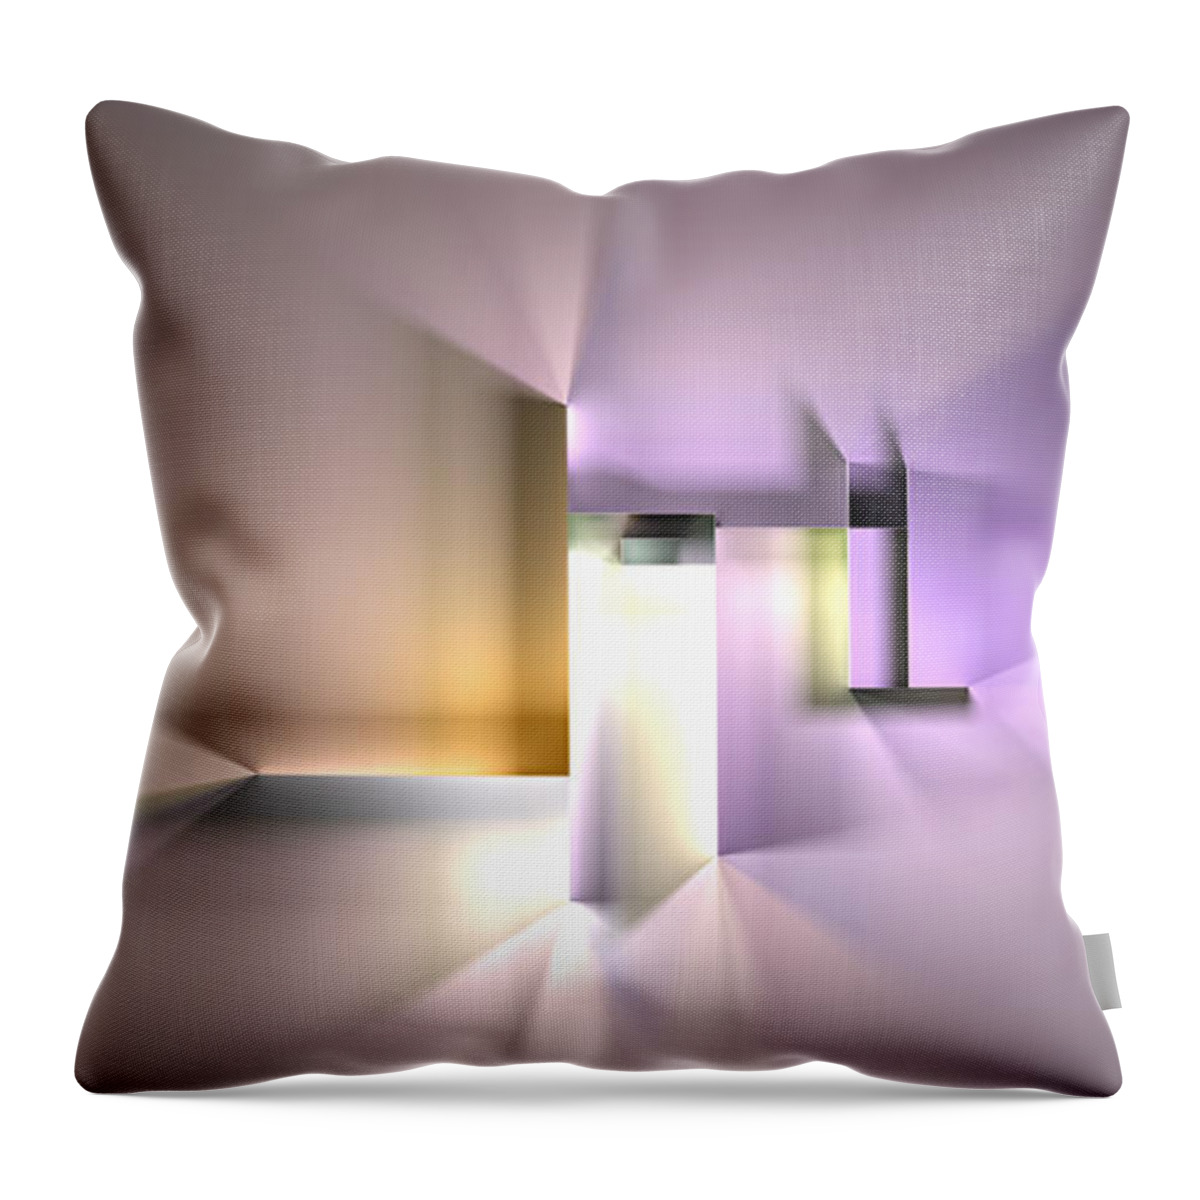 Light Throw Pillow featuring the digital art Chromatic Geometry 36 by Scott Norris